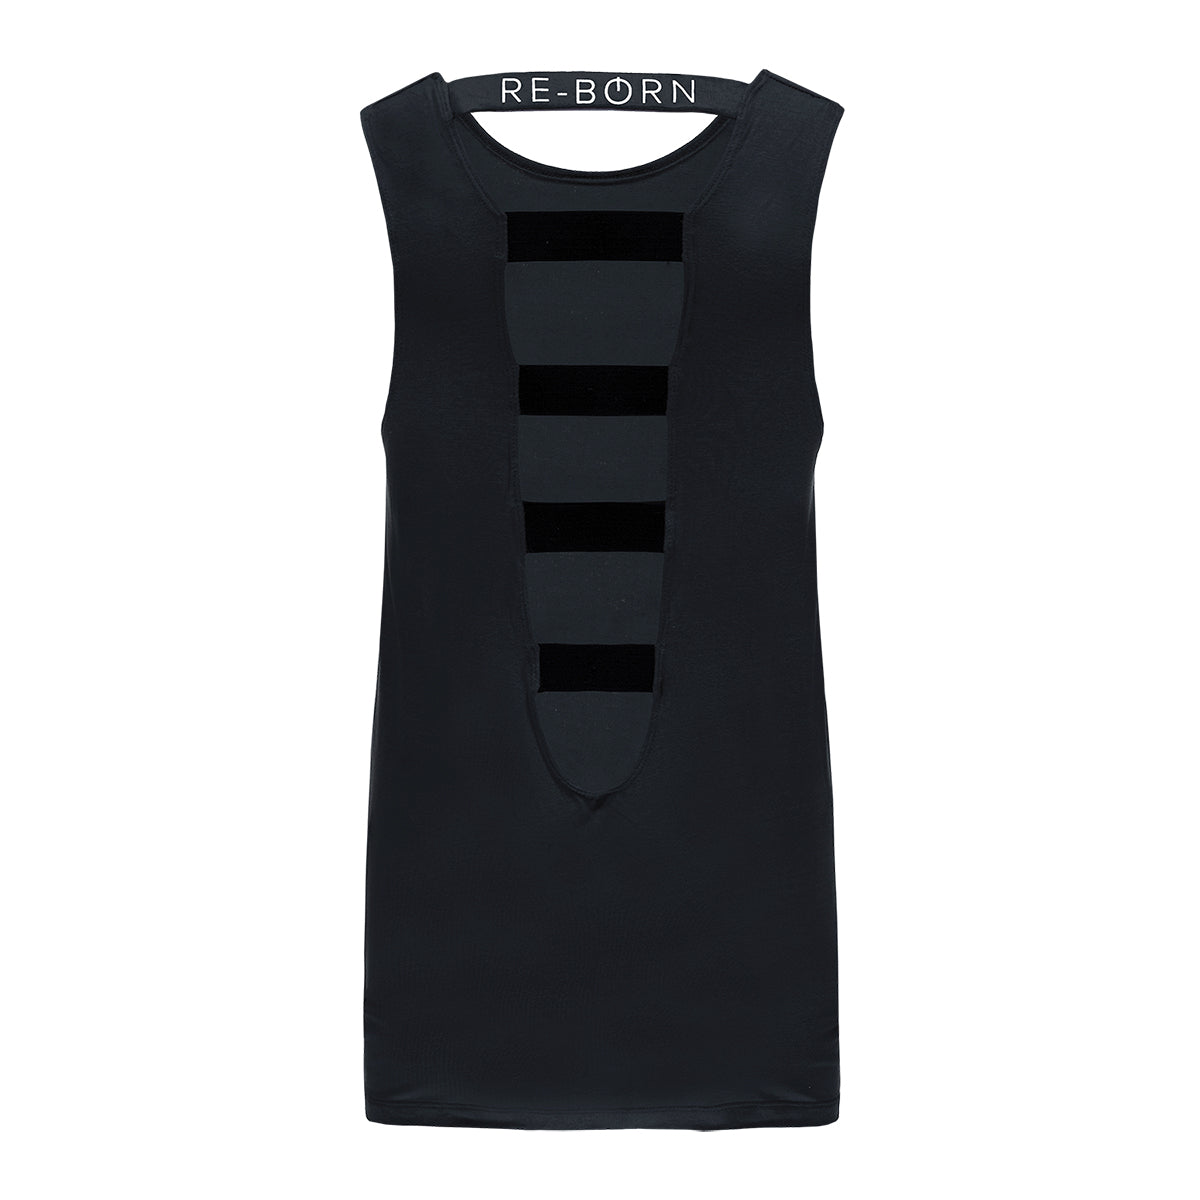 Bebe grey sleeveless tank top racer sports black logo classic authentic M,  Women's Fashion, Tops, Sleeveless on Carousell